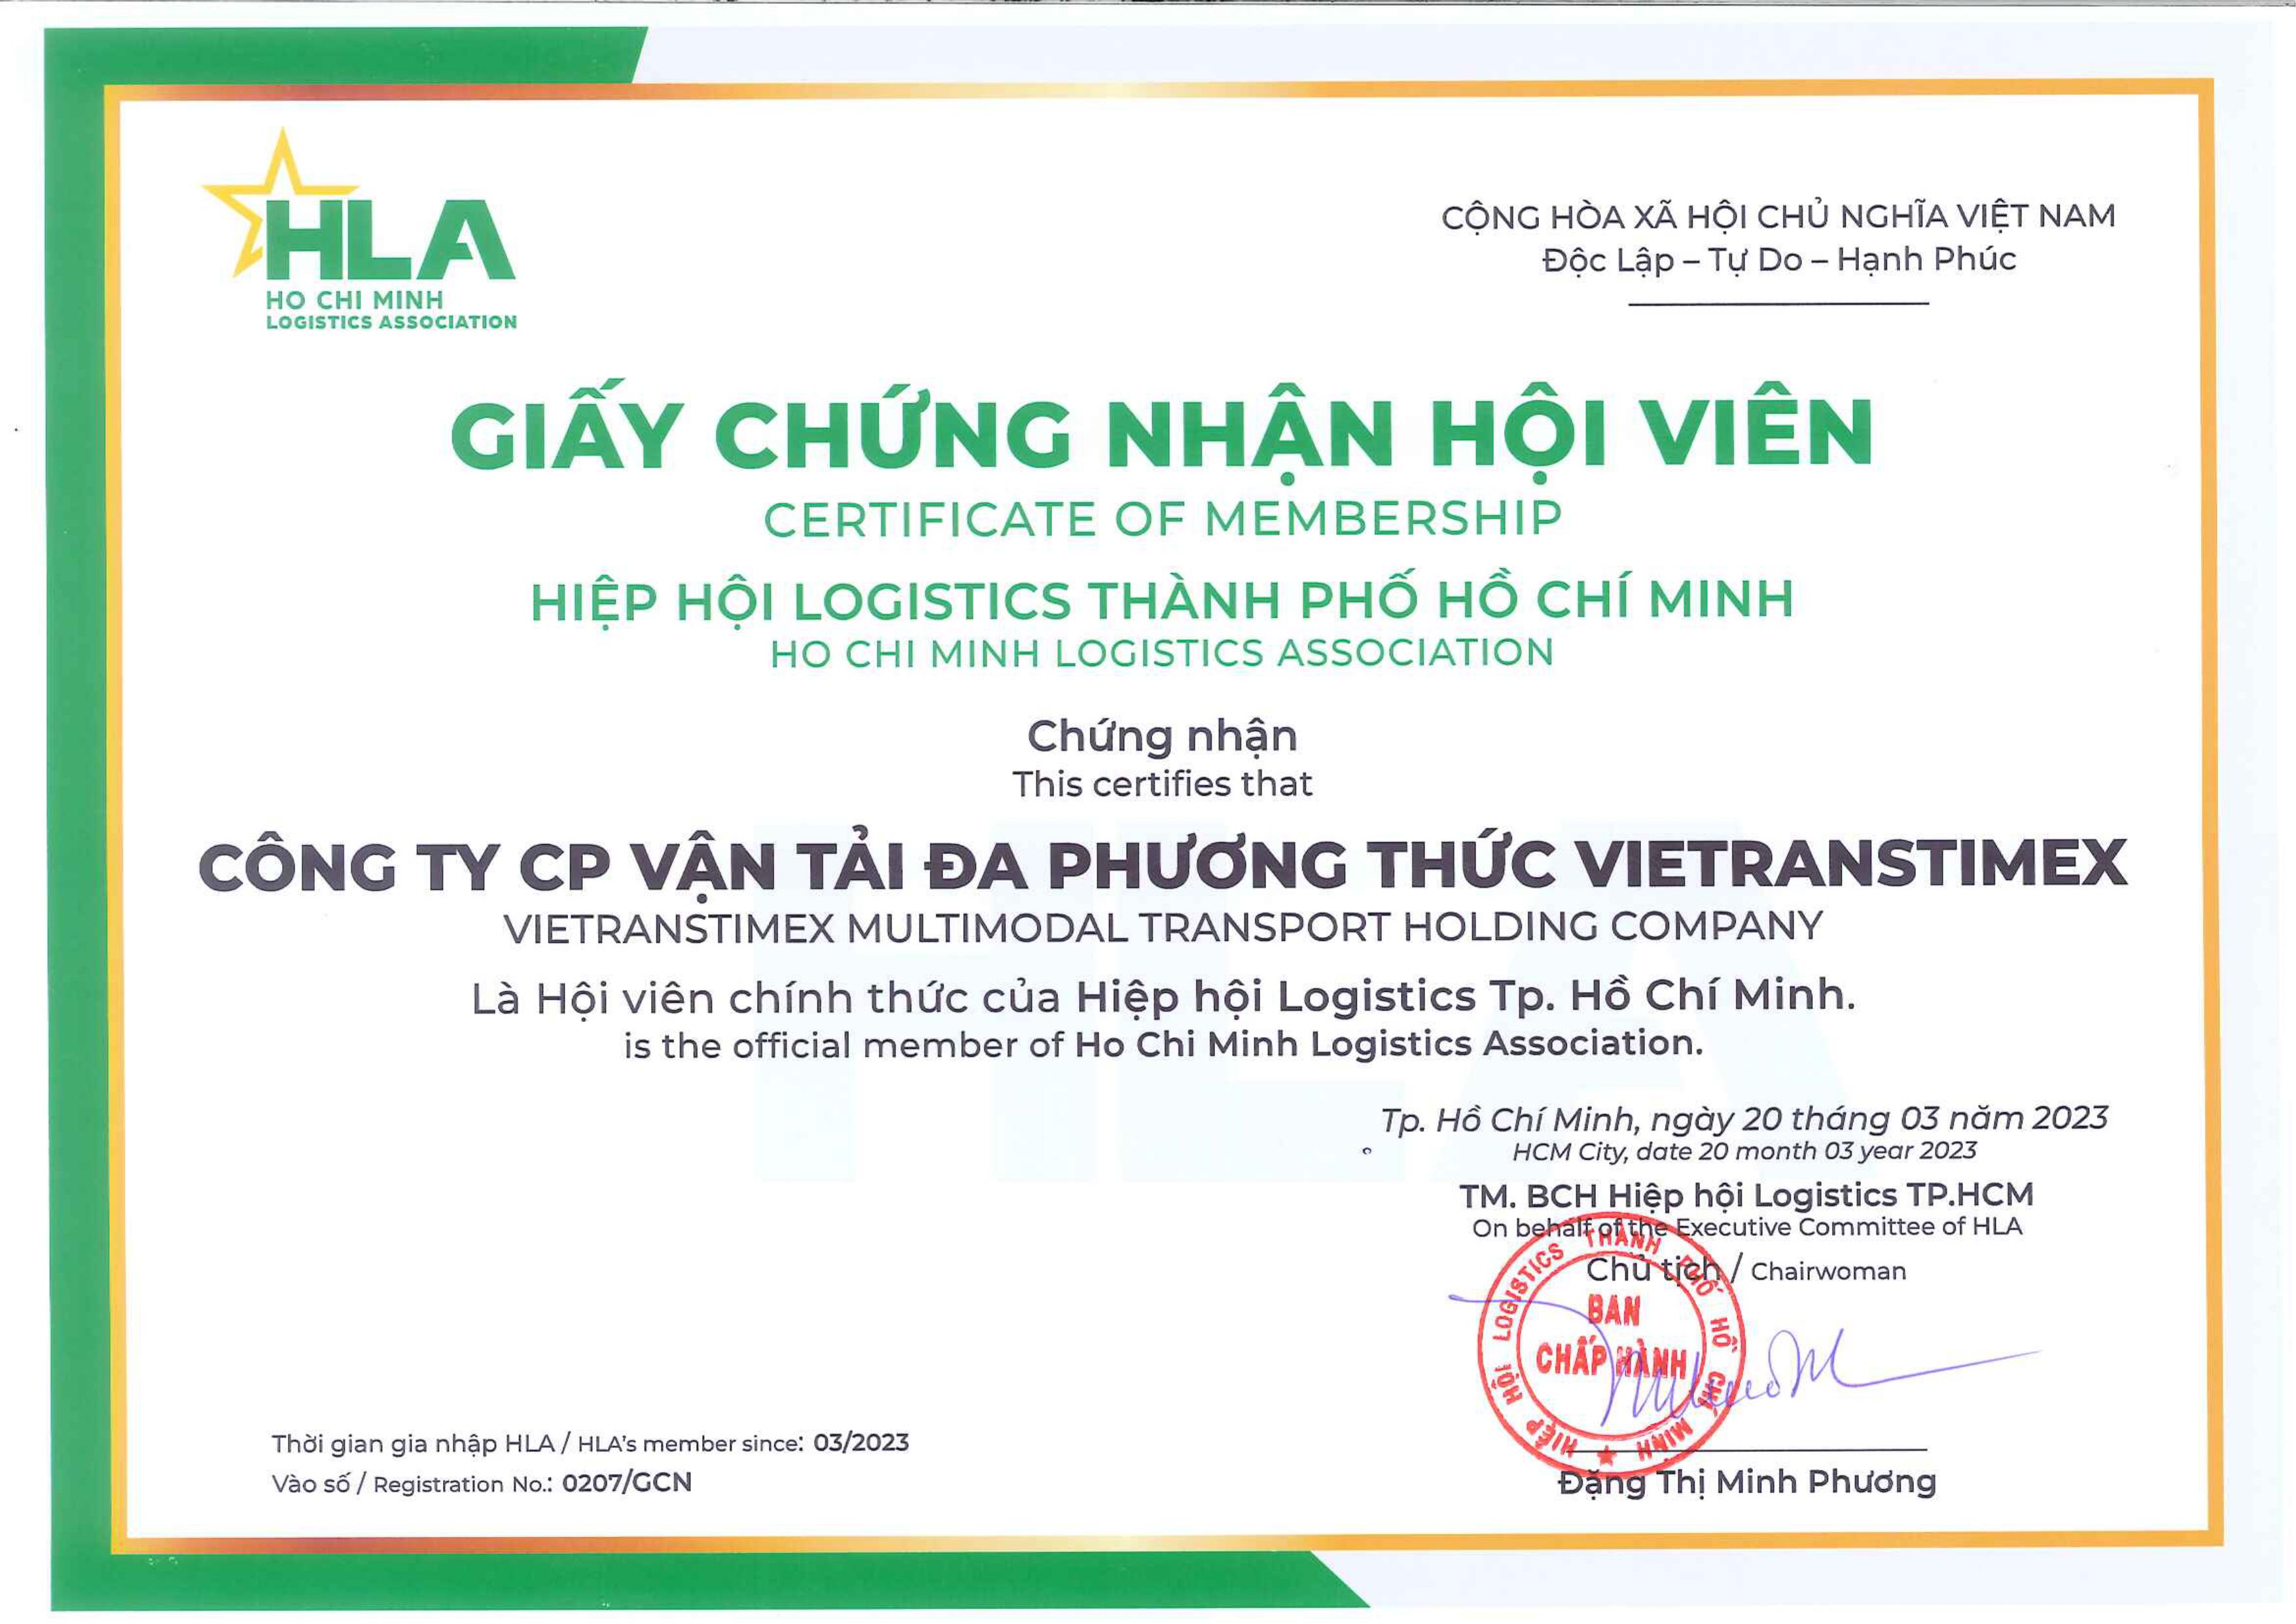 Ho Chi Minh Logistics Association (HLA)